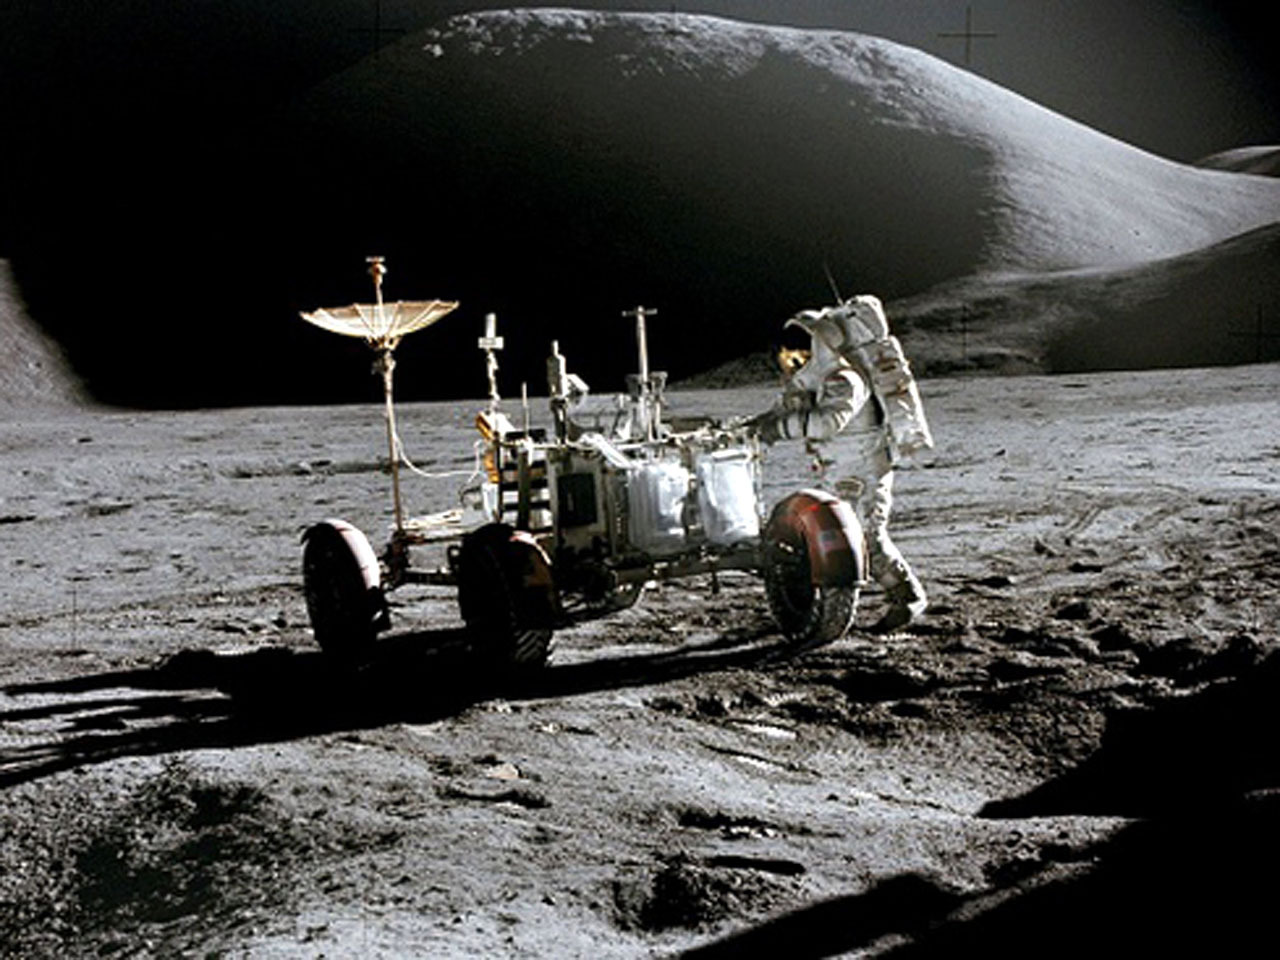 Apollo moon rocks challenge lunar water theory - CBS News1280 x 960